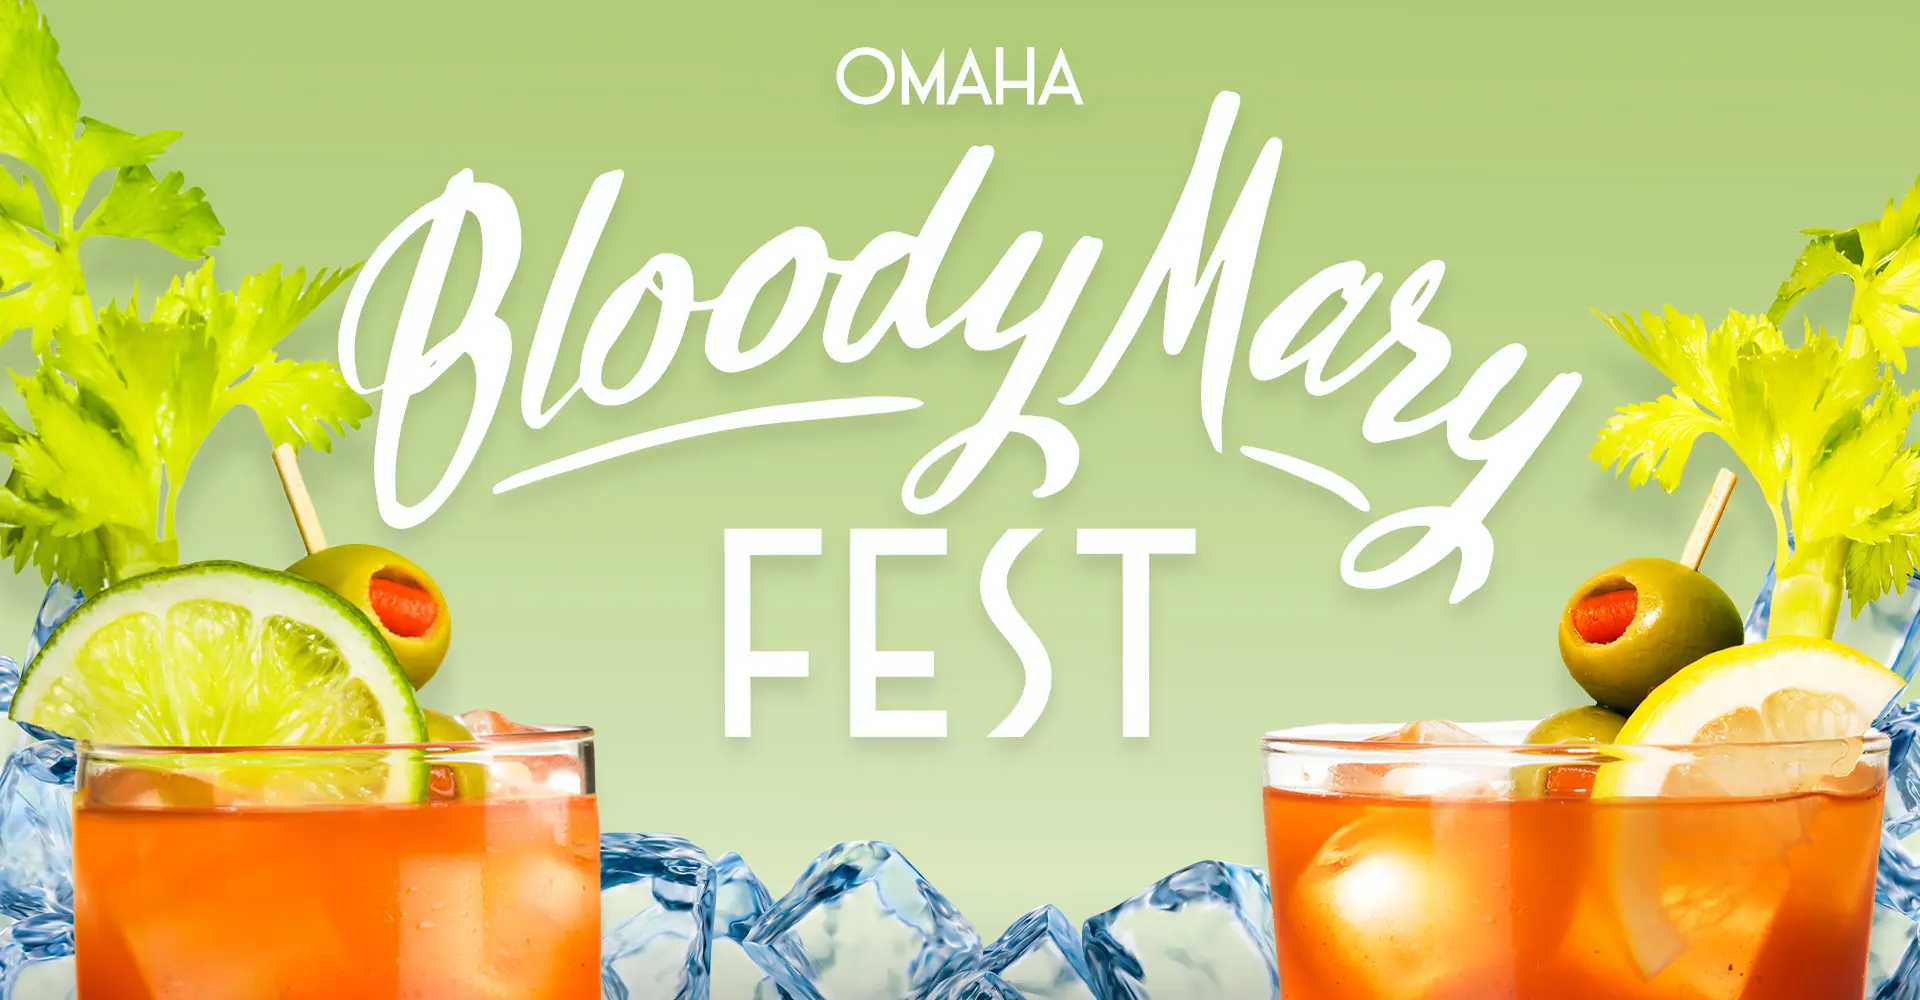 Omaha Bloody Mary Fest Hero Image